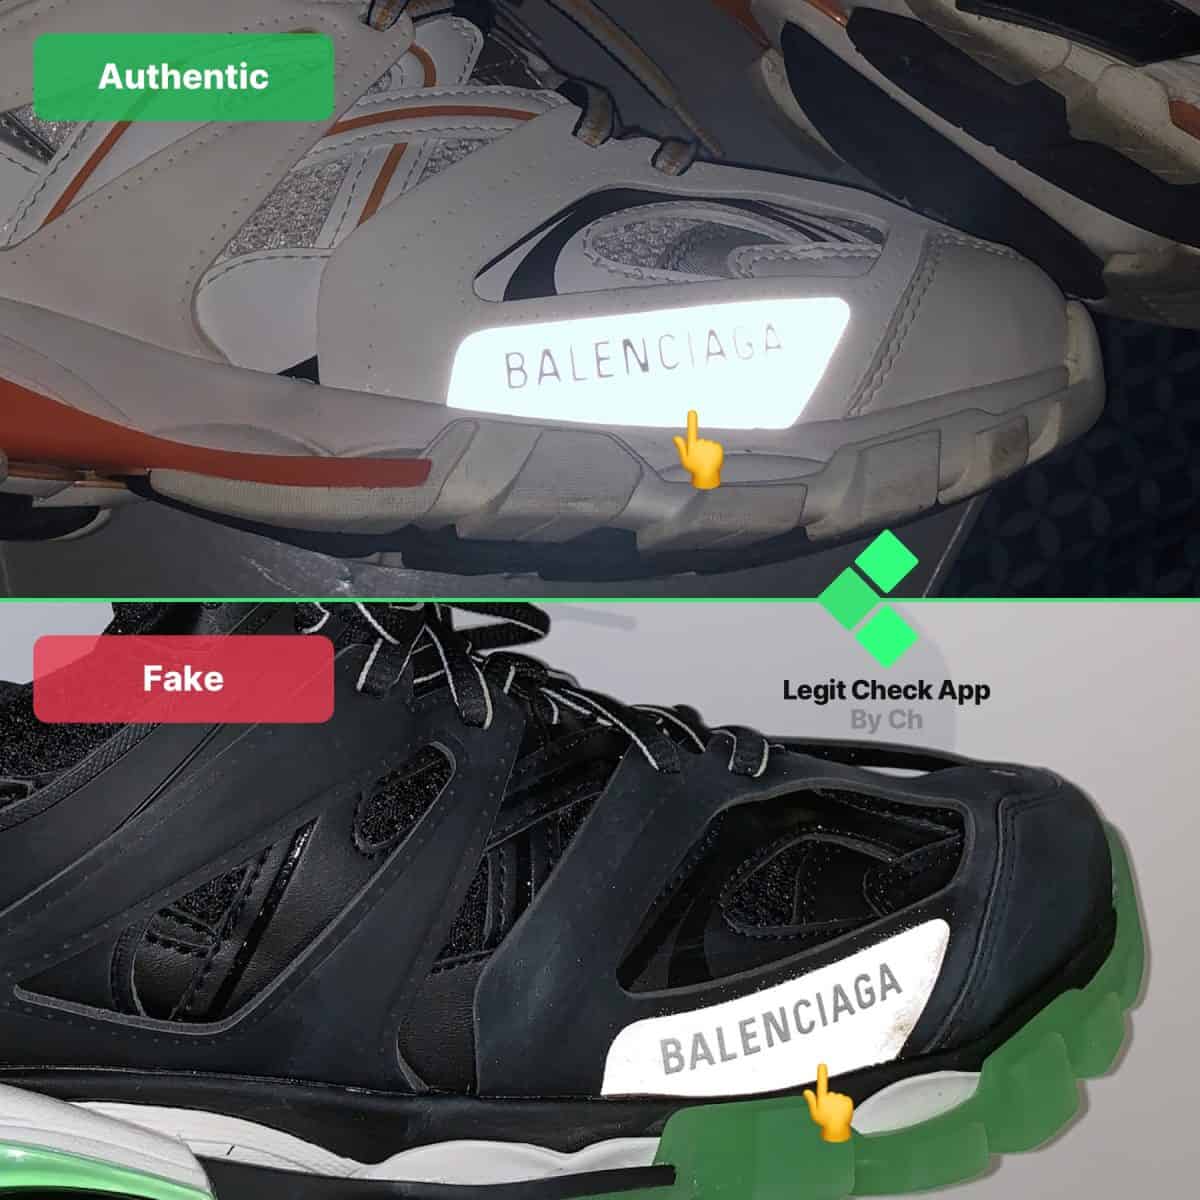 balenciaga track sneakers true to size